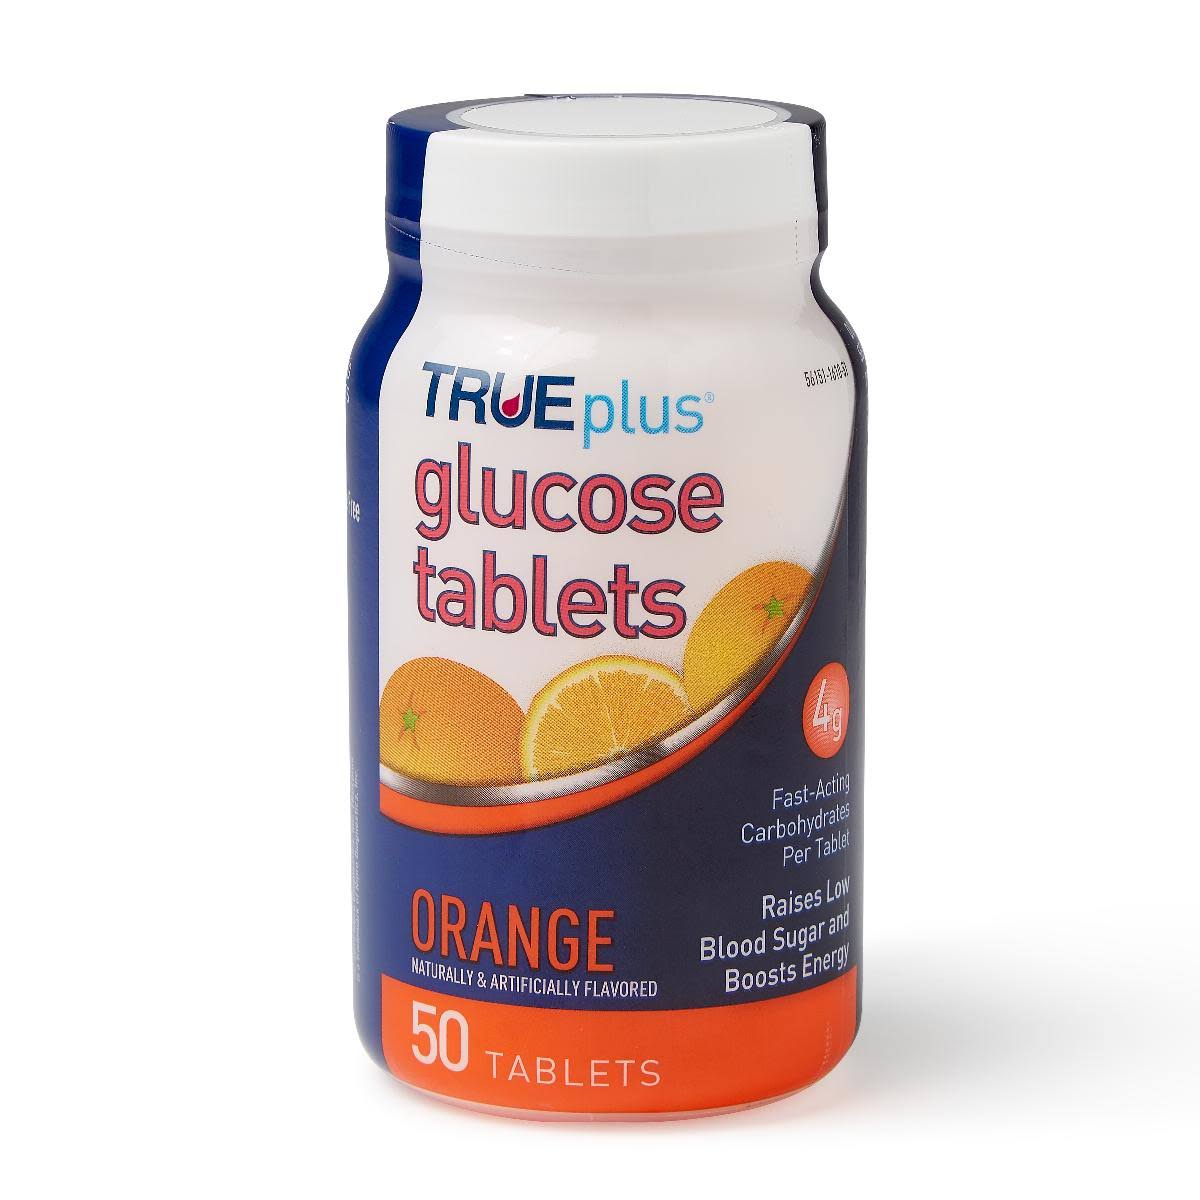 TRUEplus Glucose Tablets Orange - 50ct